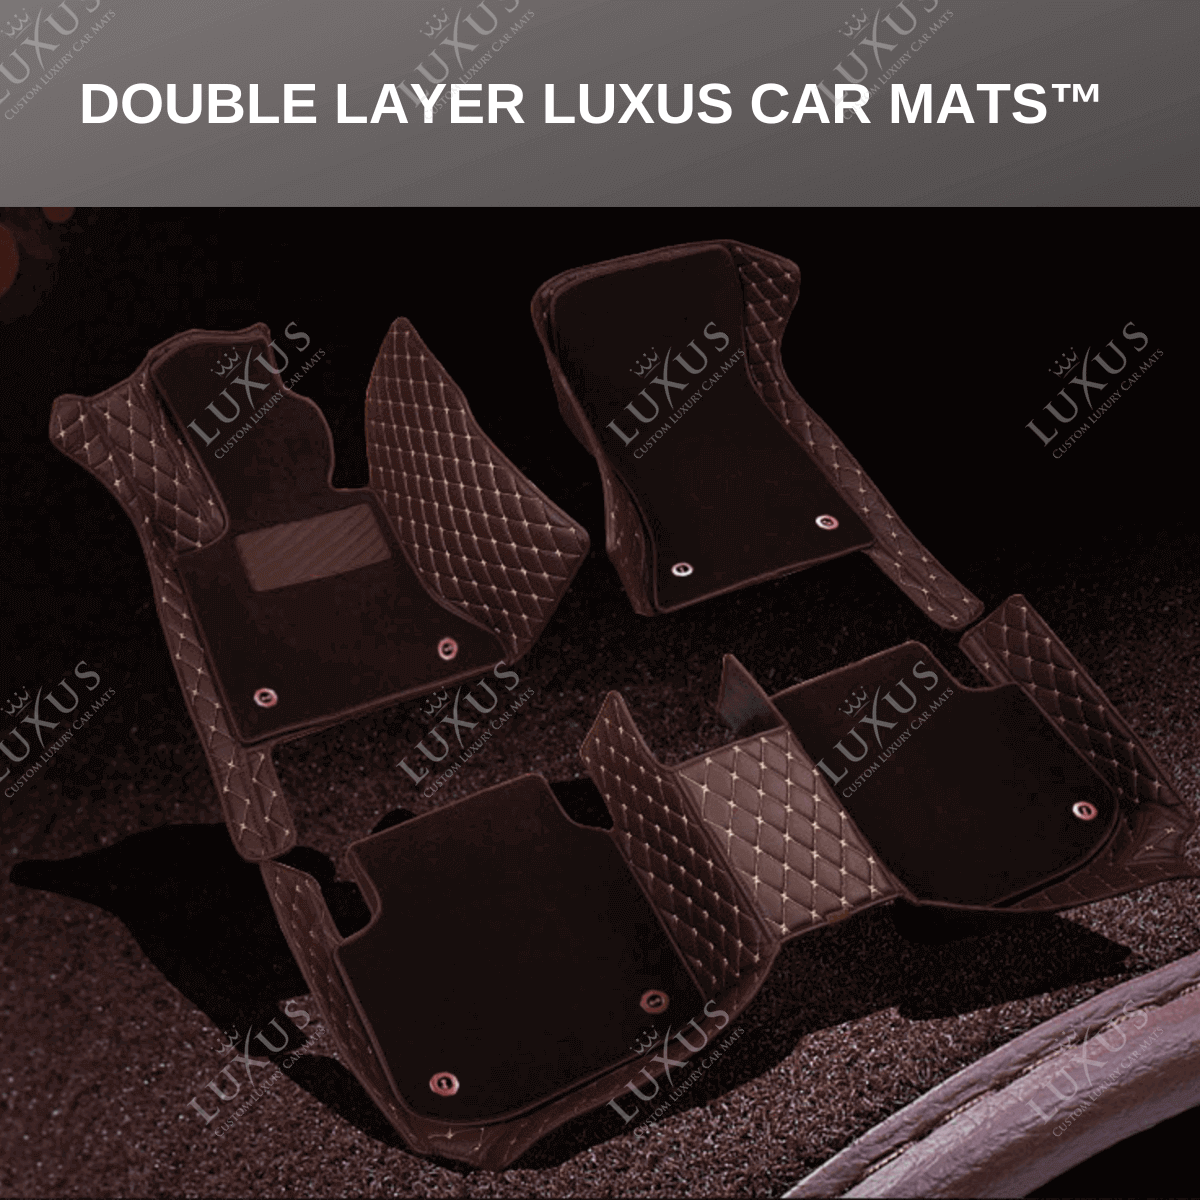 Black & Black Diamond Stitching Base & Grey Top Carpet Double Layer Luxury Car Mats Set